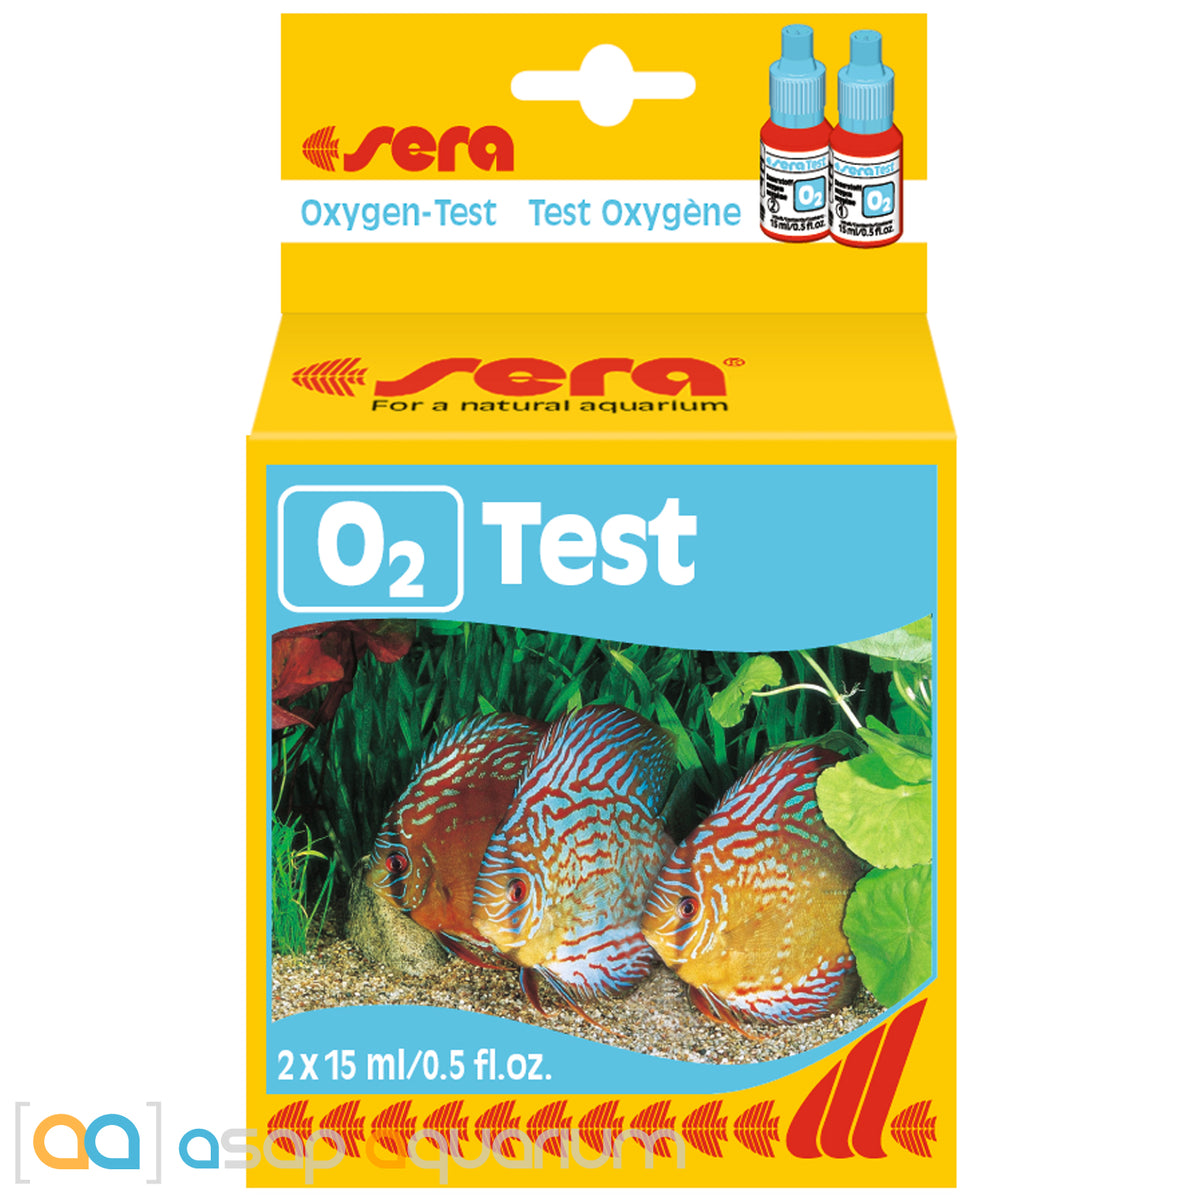 Zera Aquarium pH Test Kit - Horizone Fish Foods